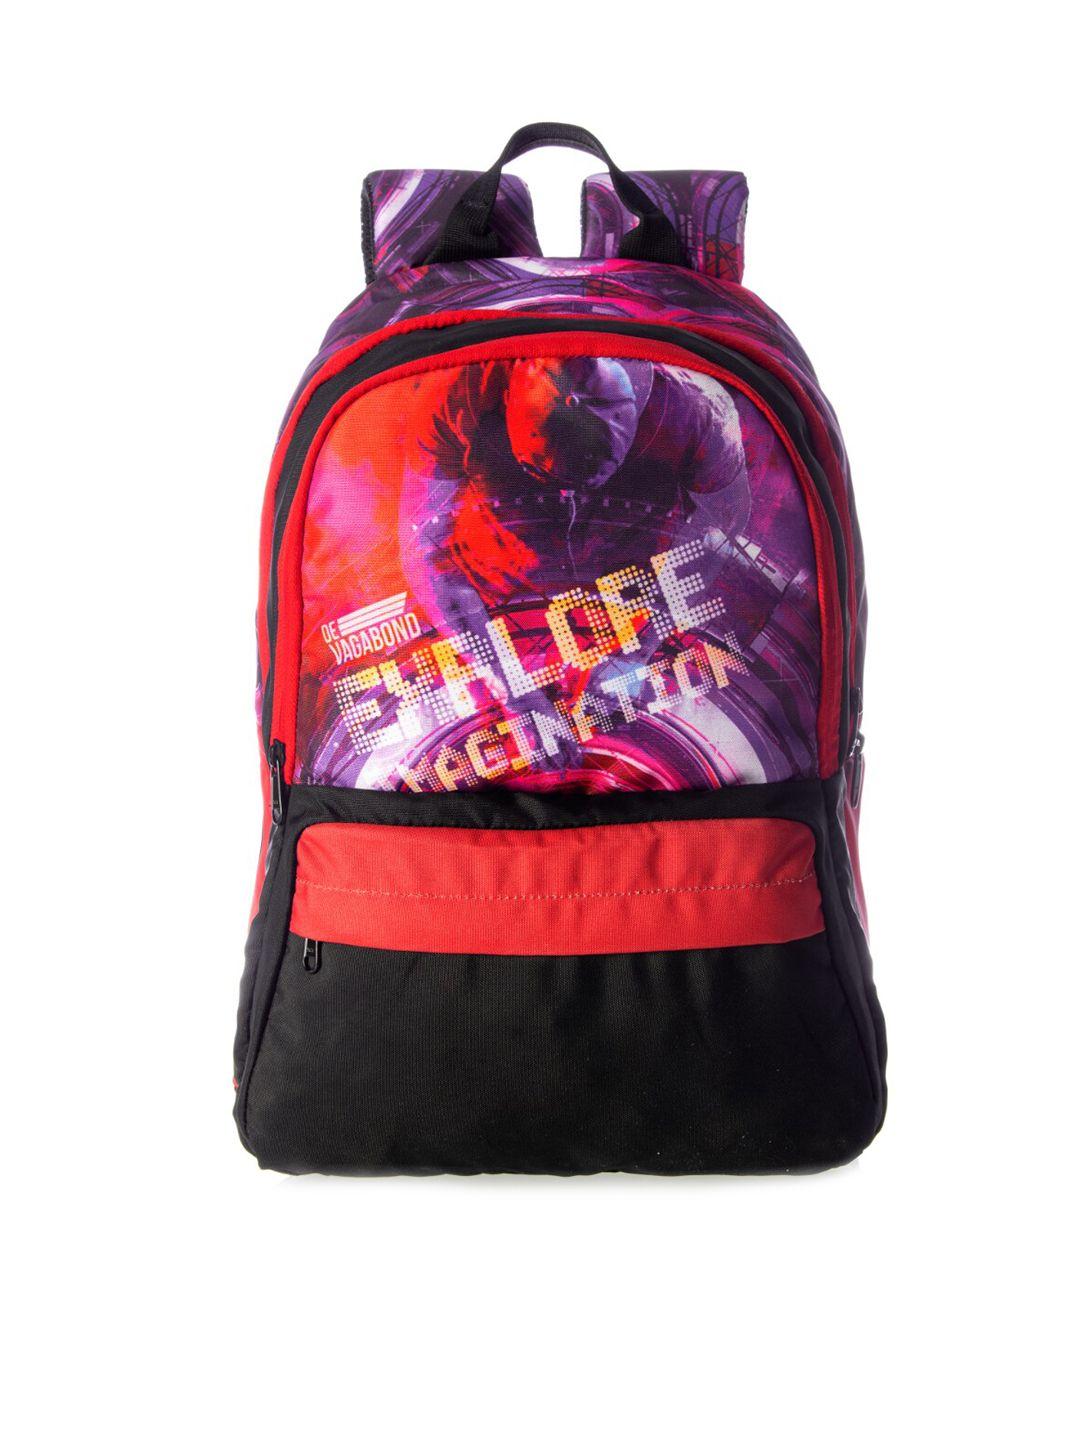 devagabond unisex red & black graphic backpack